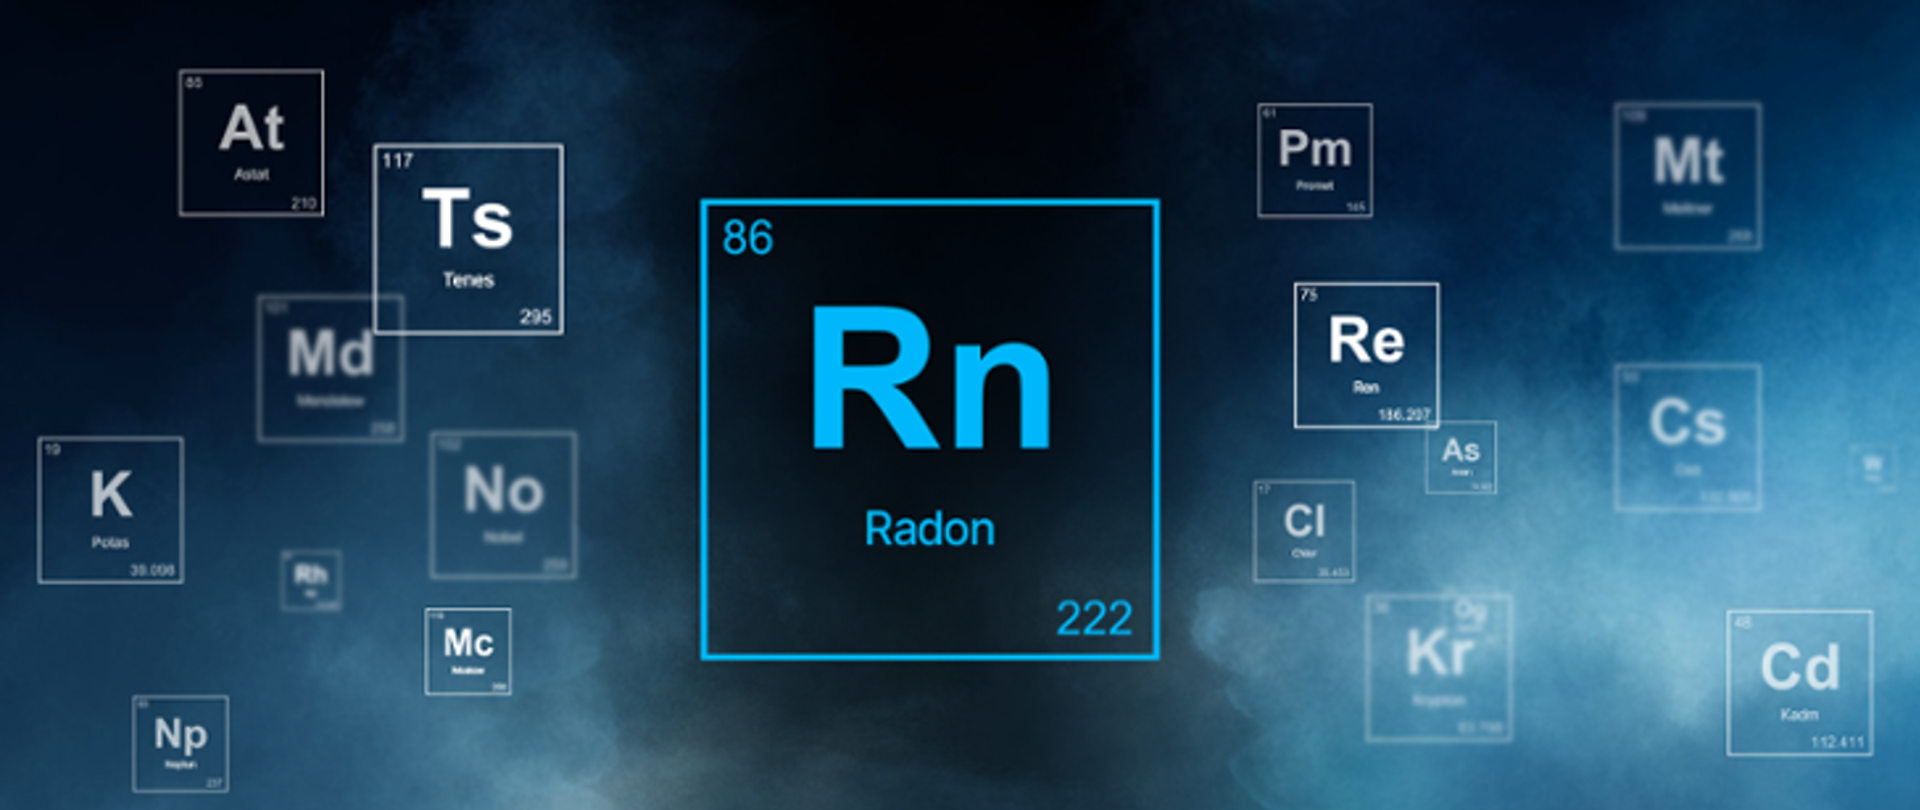 Pierwiastek z Tablicy Mendelewa Radon